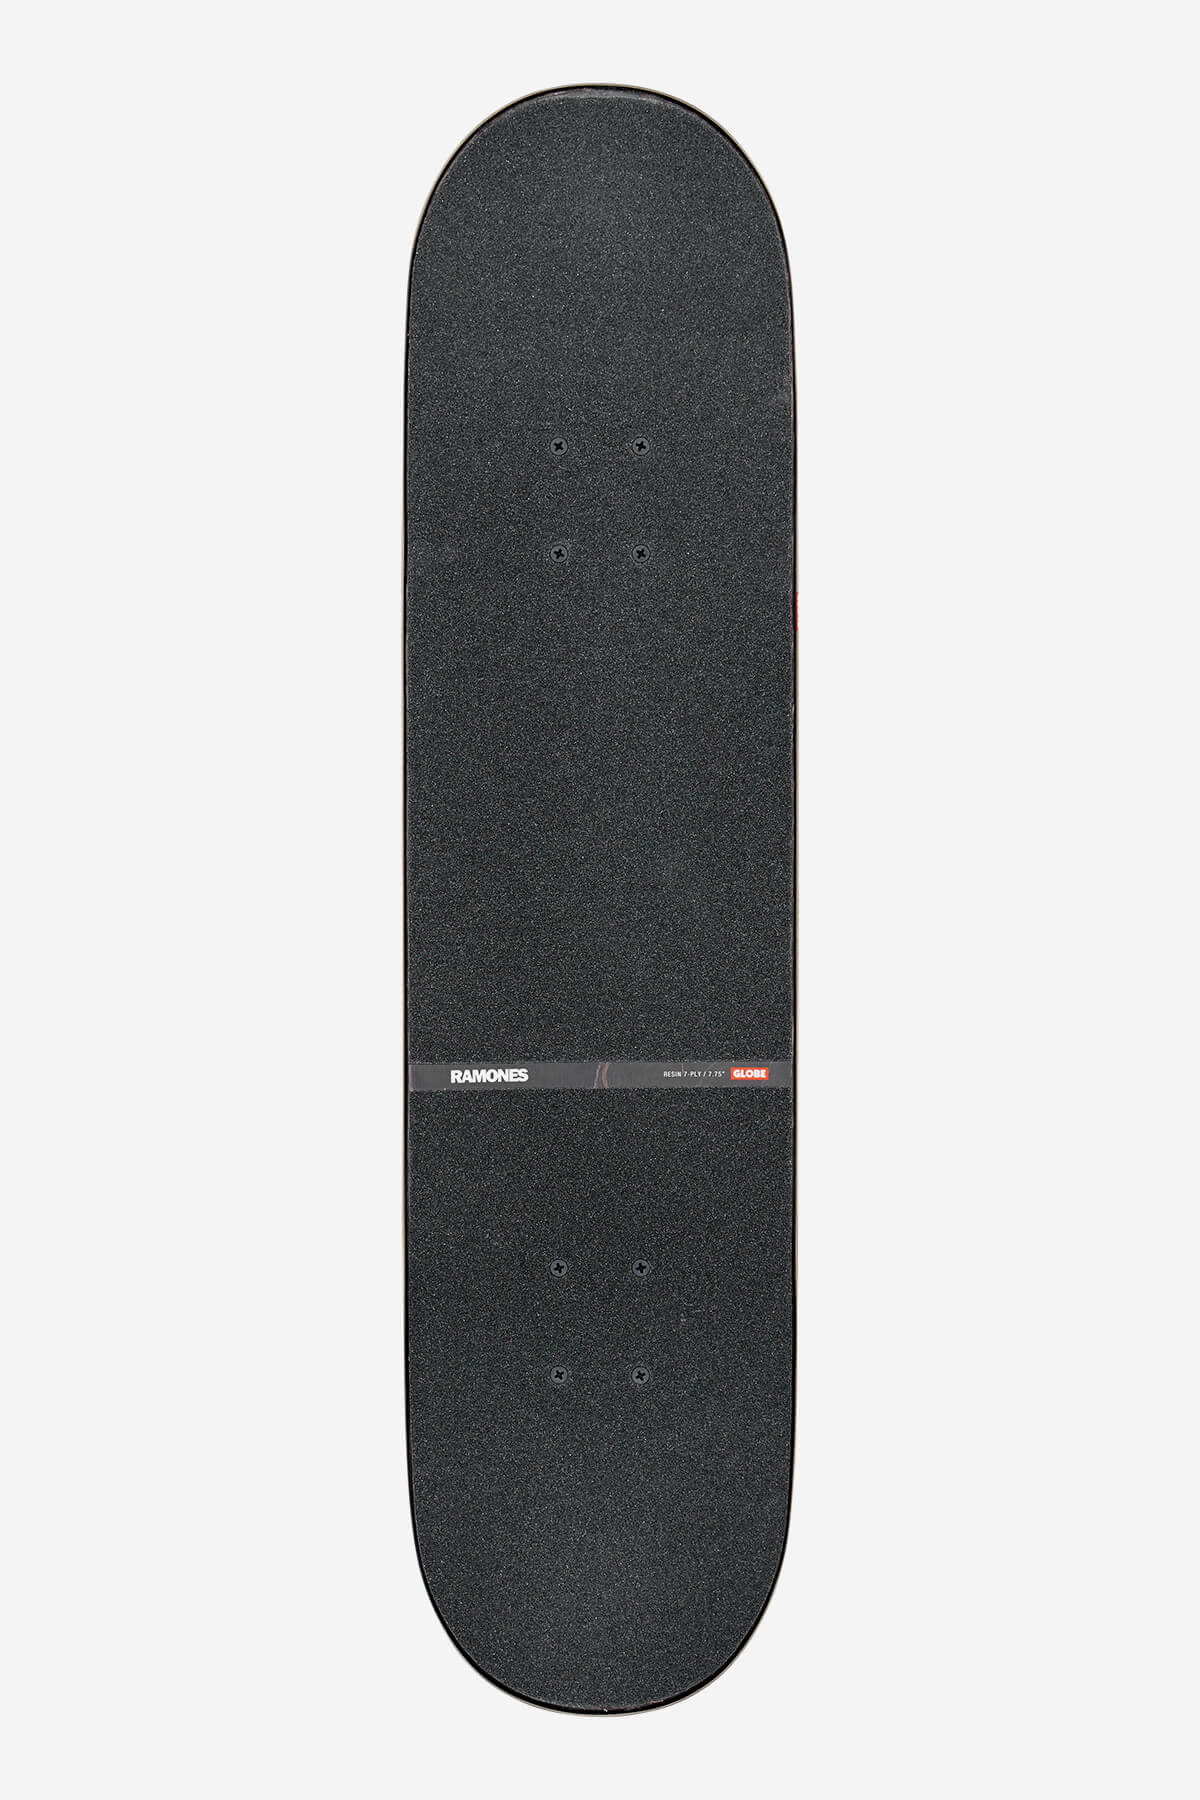 Globe Skateboard completen G2 Ramones - 7.75" Compleet Skateboard in RAMONES